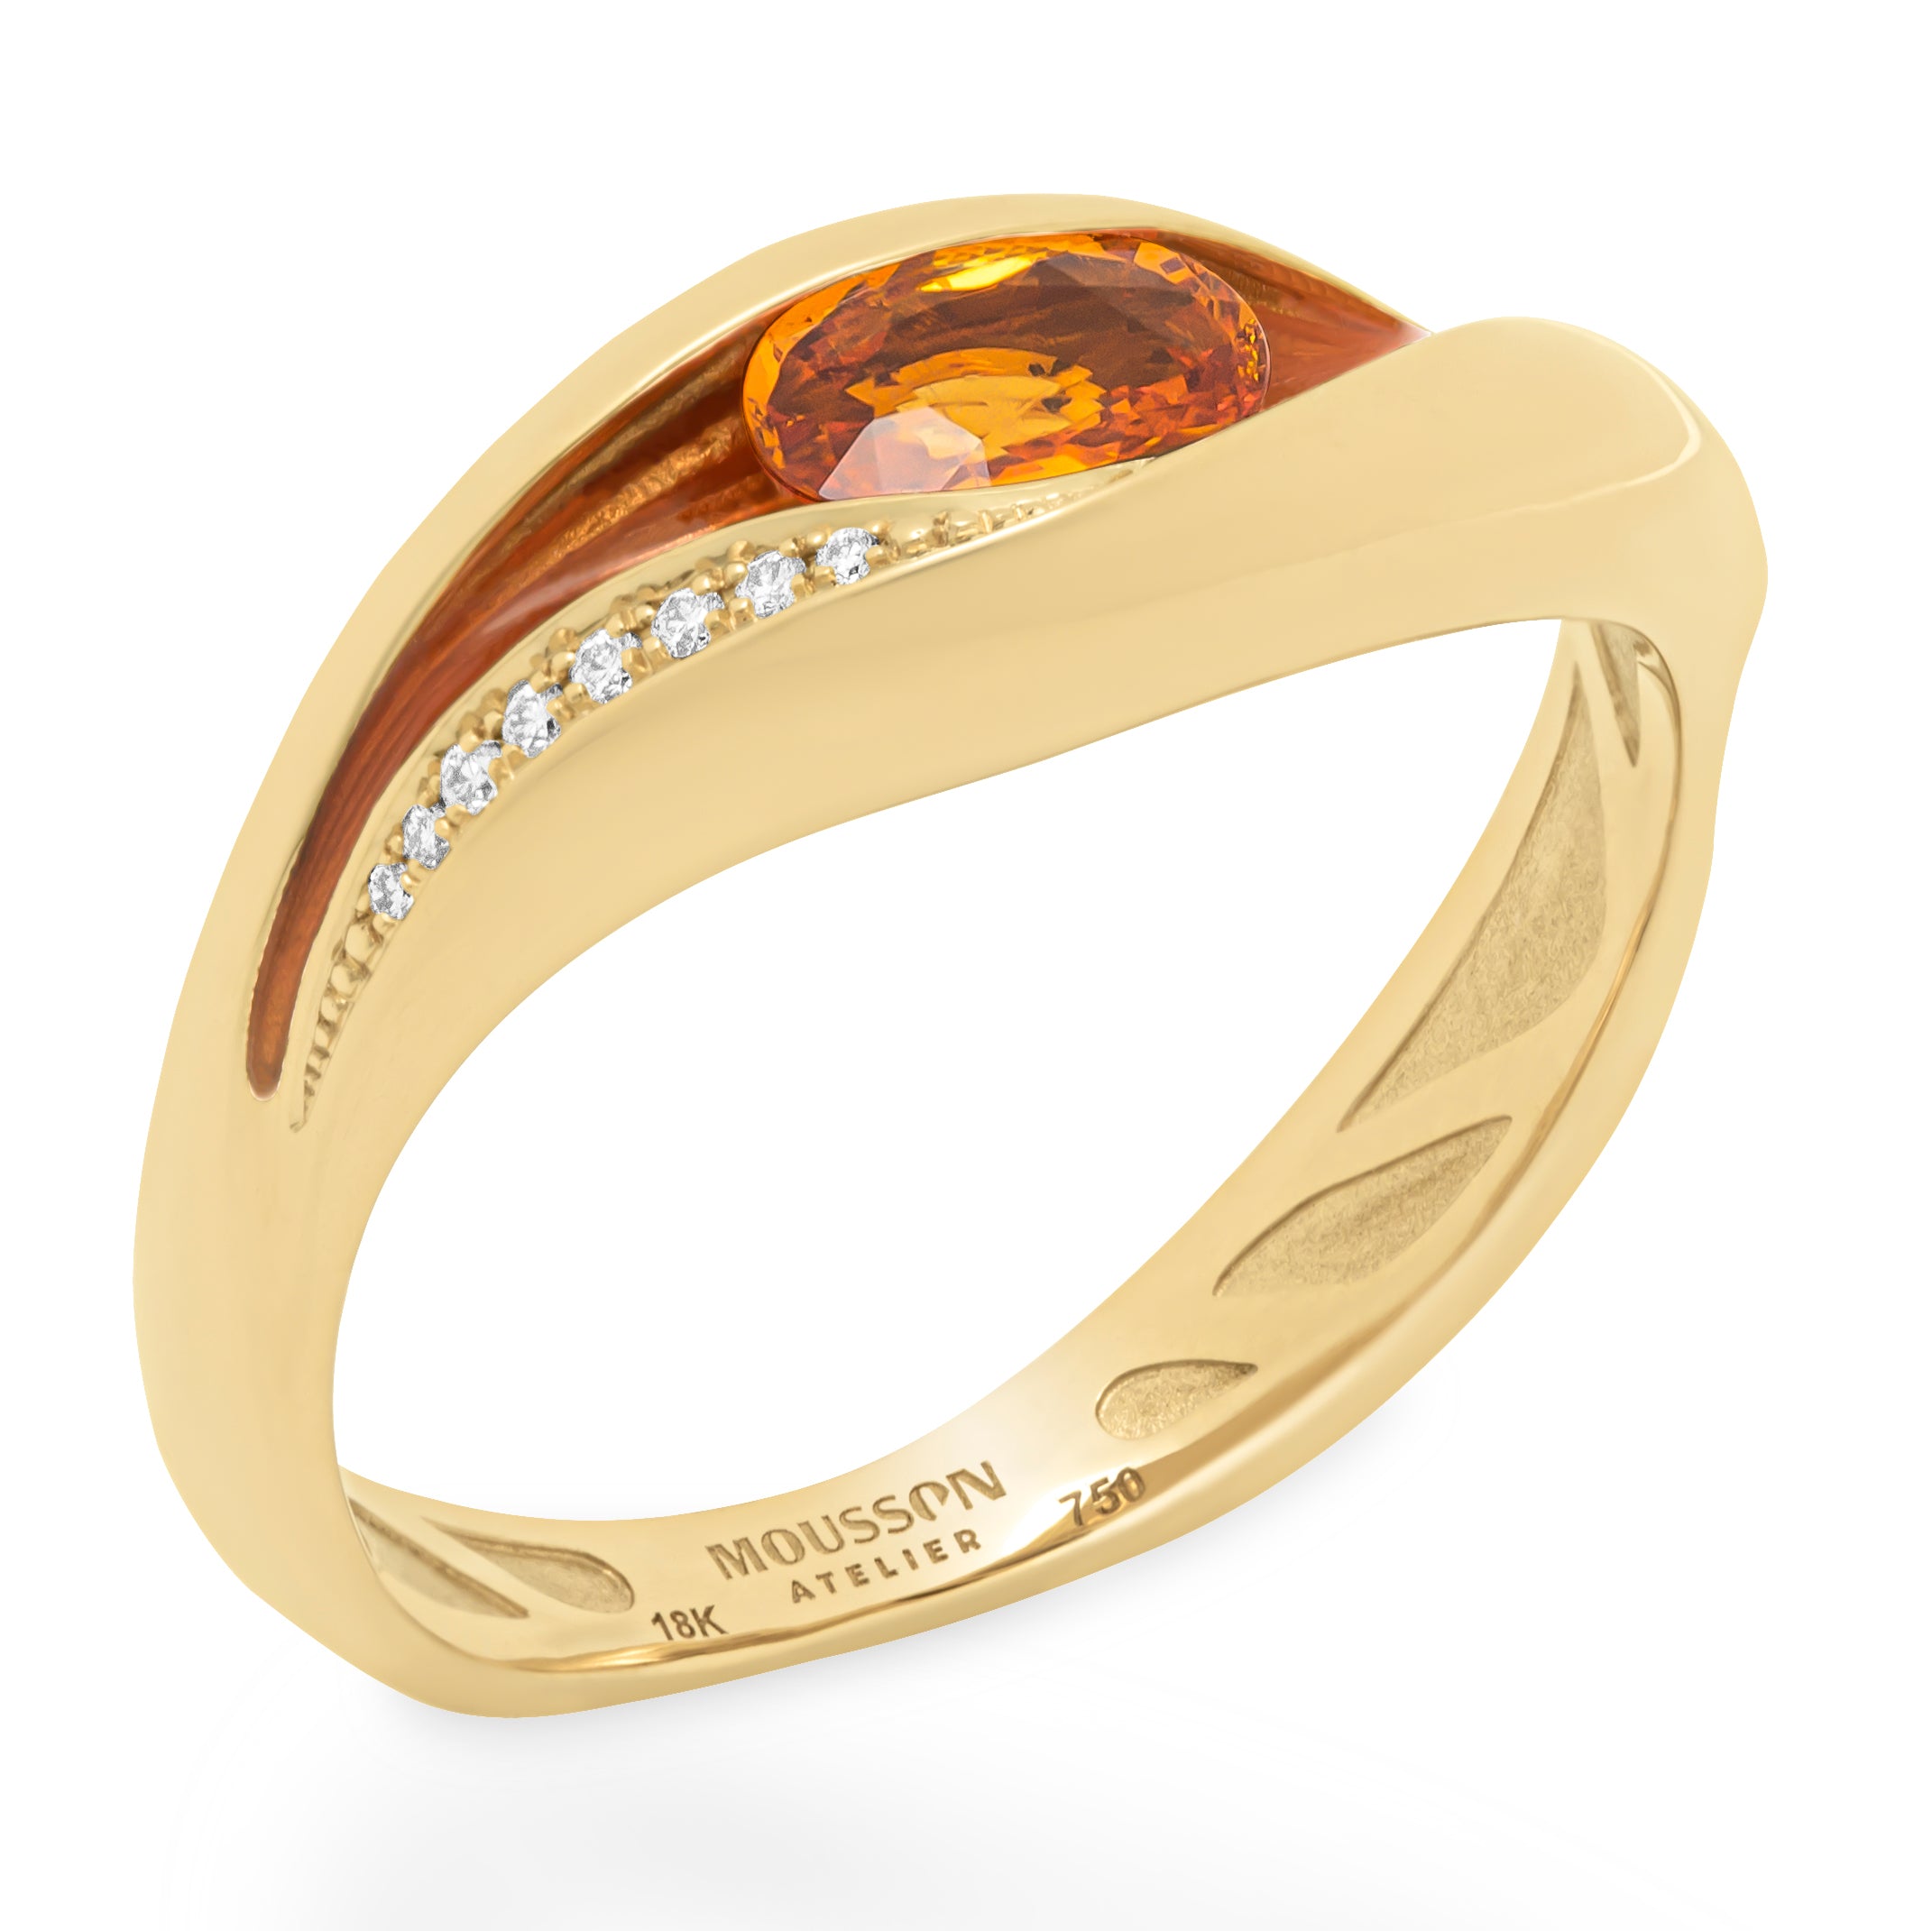 R 0123-6 18K Yellow Gold, Enamel, Spessartine Garnet, Diamonds Ring